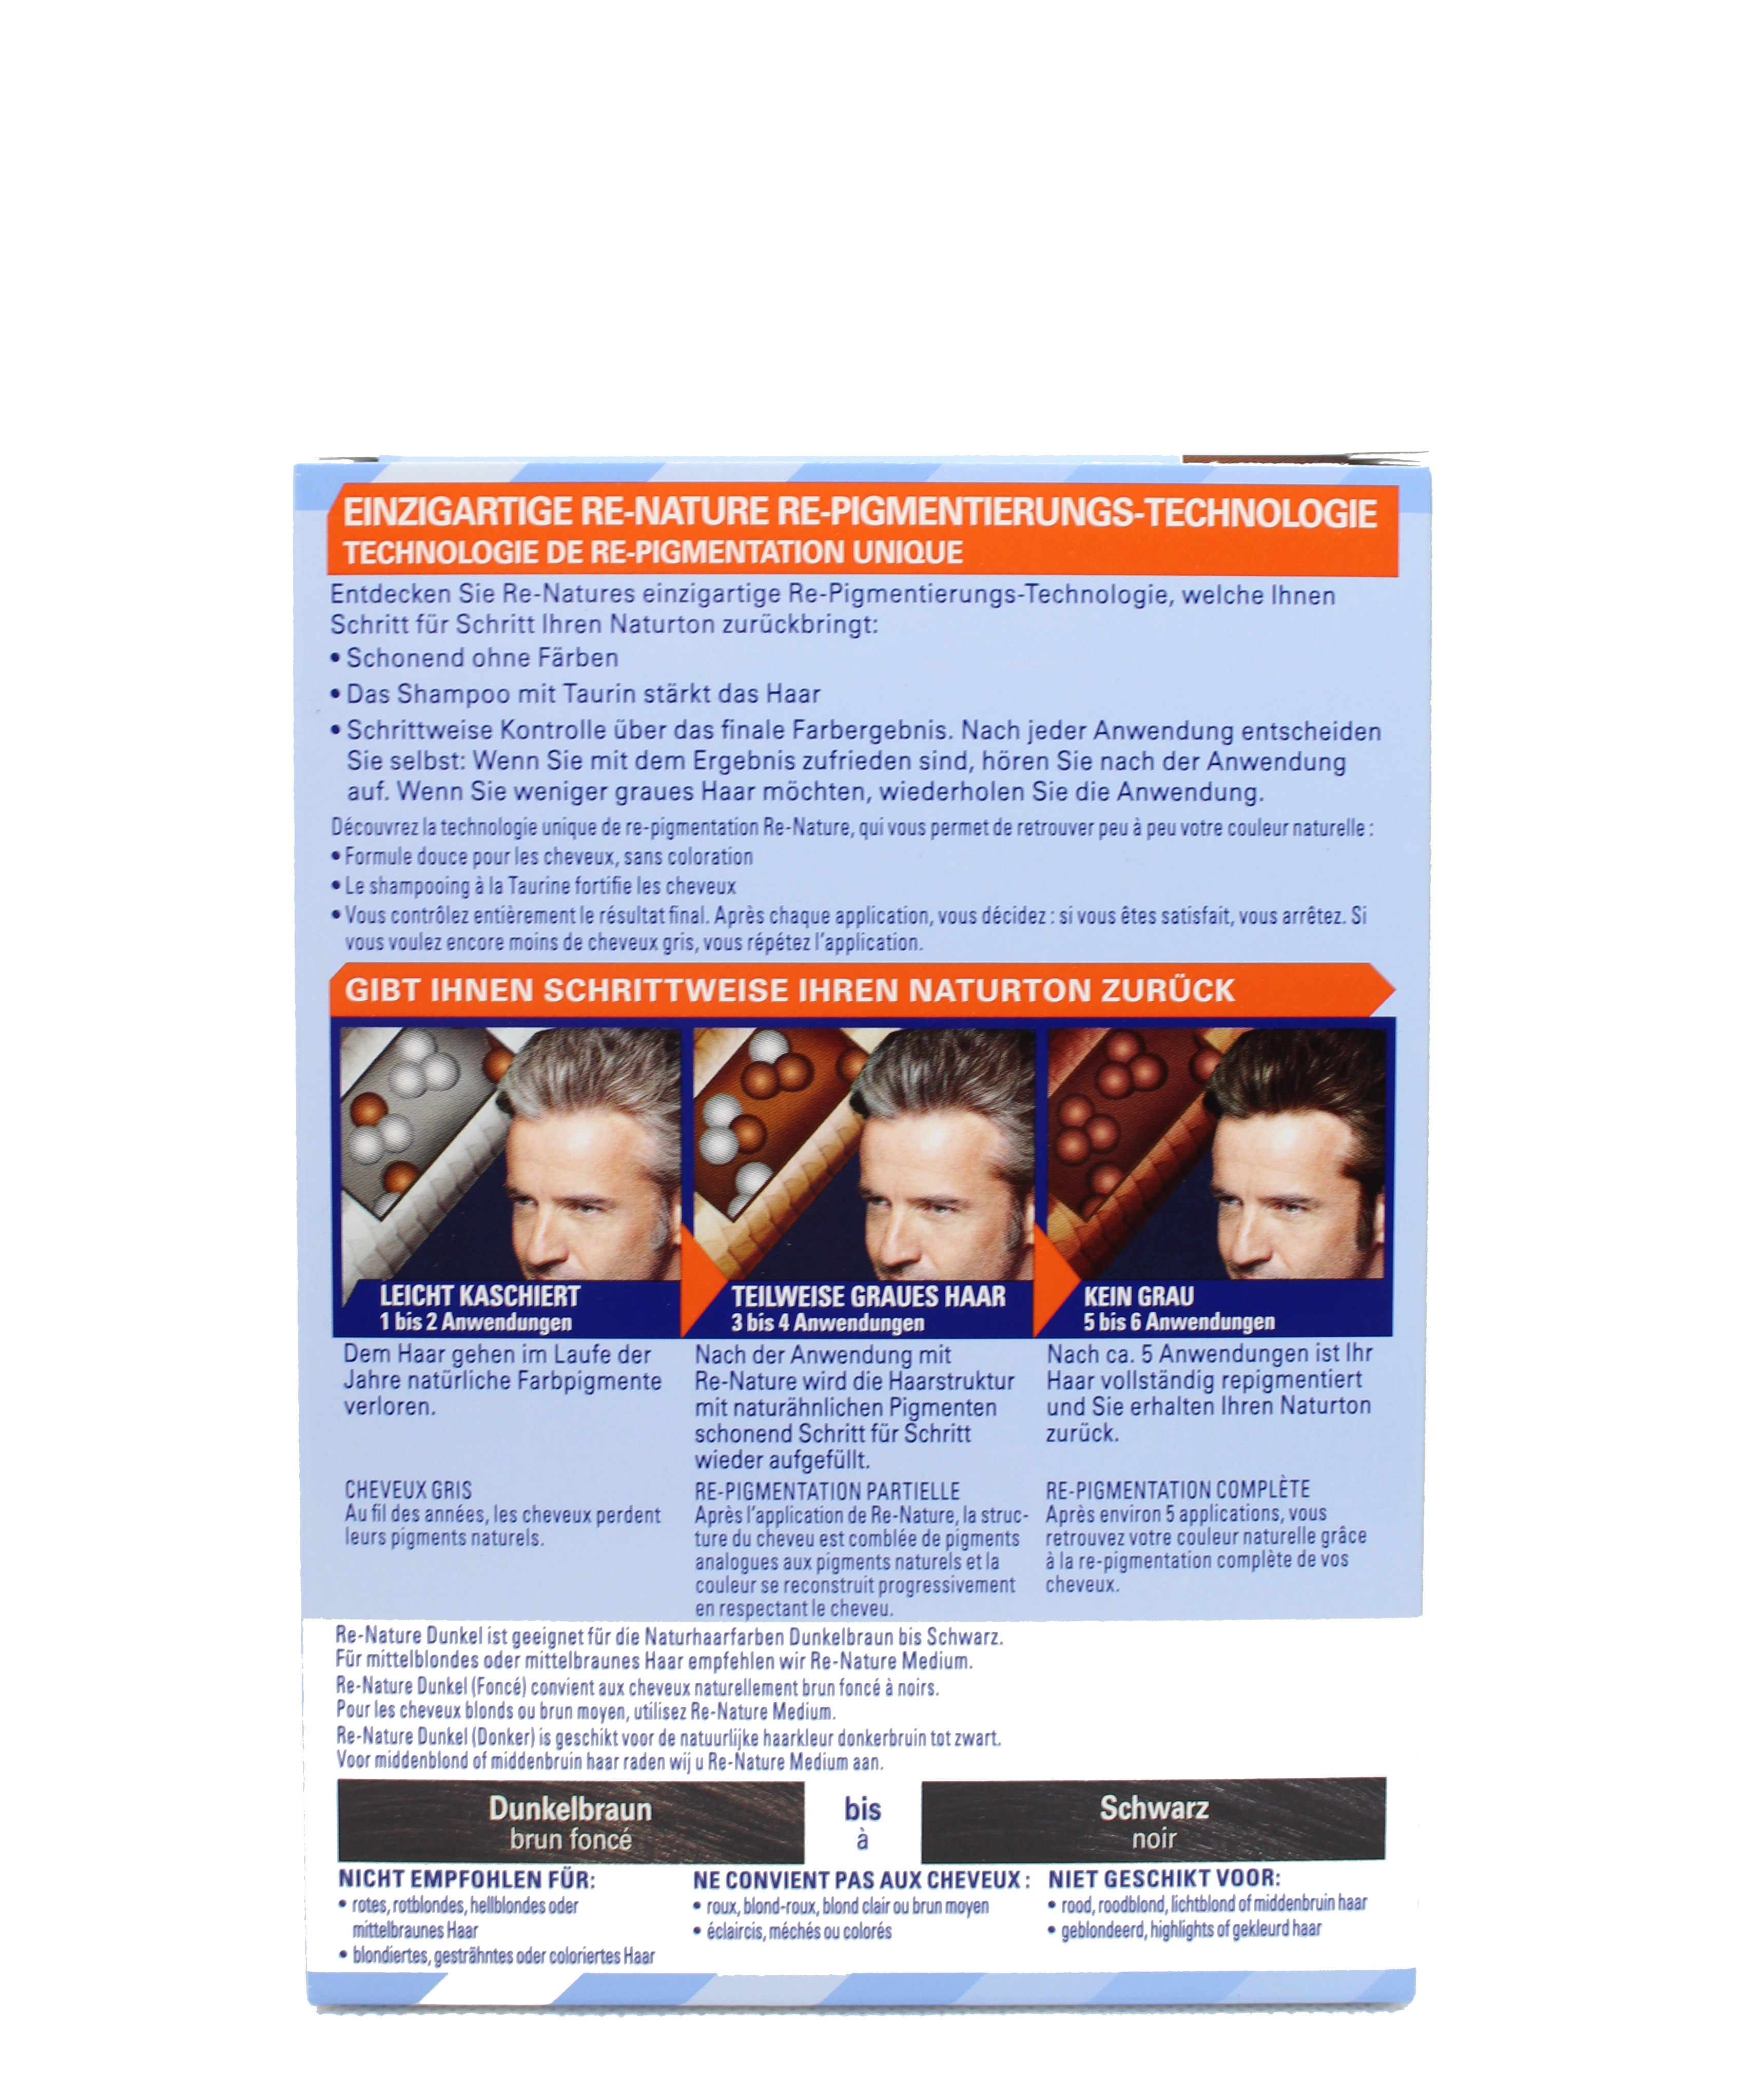 Schwarzkopf – Gray Hair – Men's Natural Coloring Kit “MEN DARK” Brown/Black Buy German